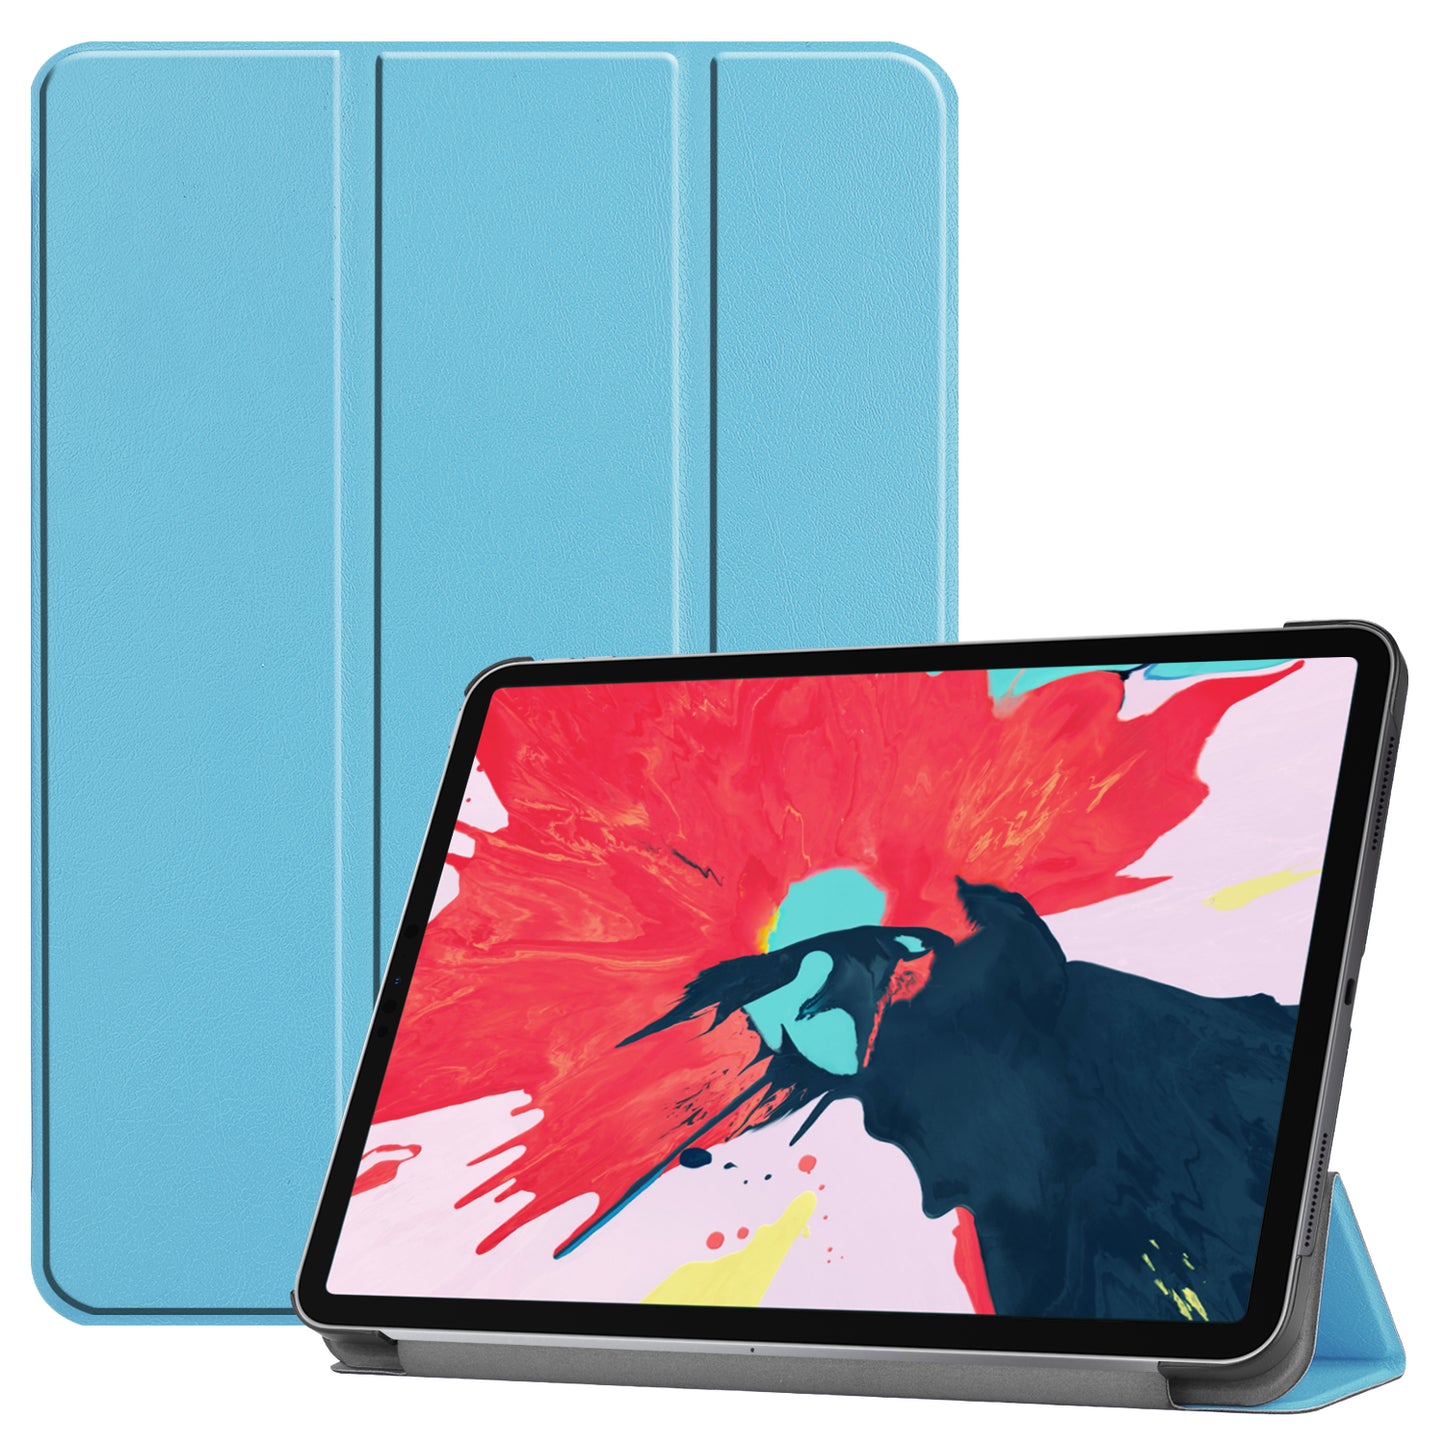 Heilolio Vegan Leather iPad Pro 11 Case 2020/ 2018 - [Slim Trifold Stand + Smart Auto Wake/Sleep], Back to School Gift